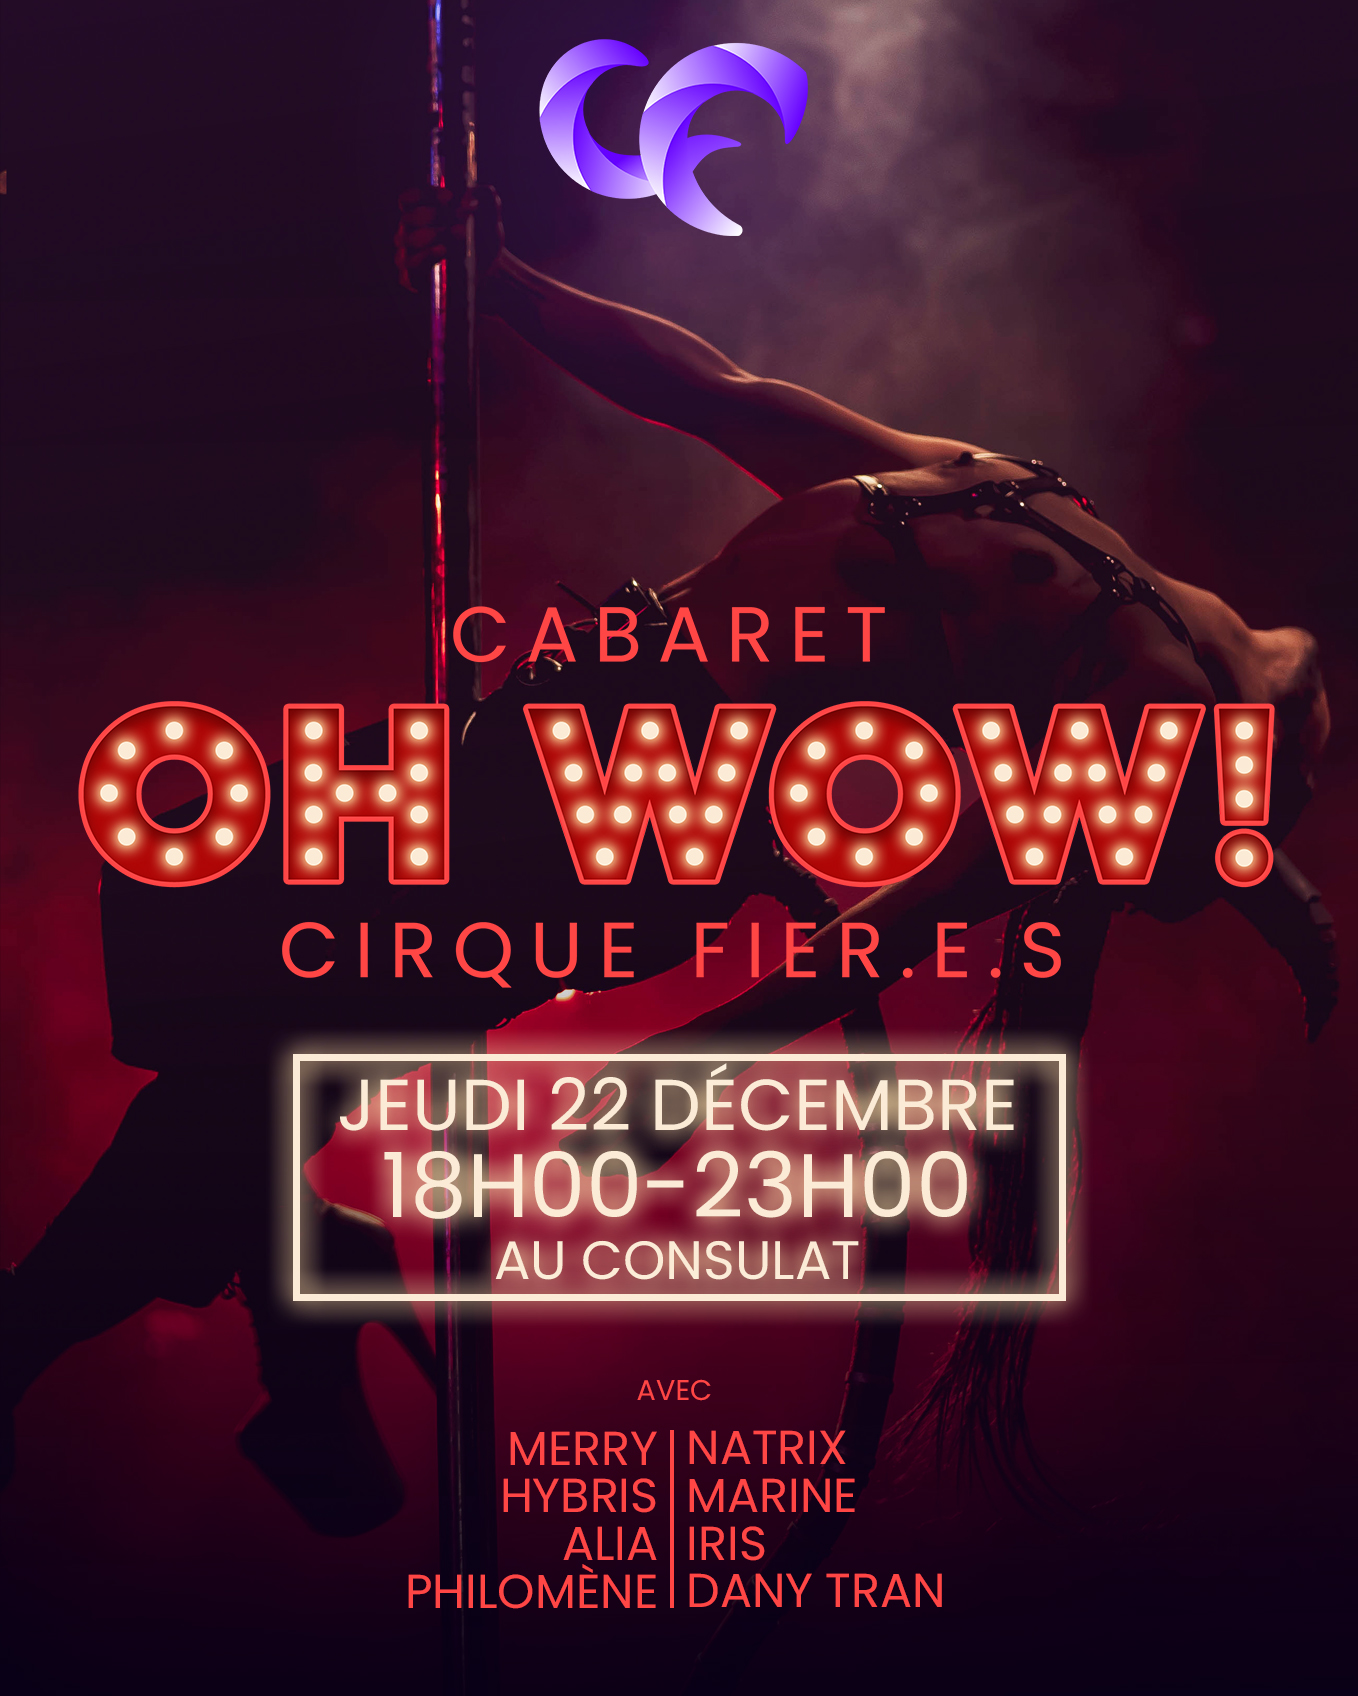 Cirque fier.e.s : Cabaret « OH WOW! »